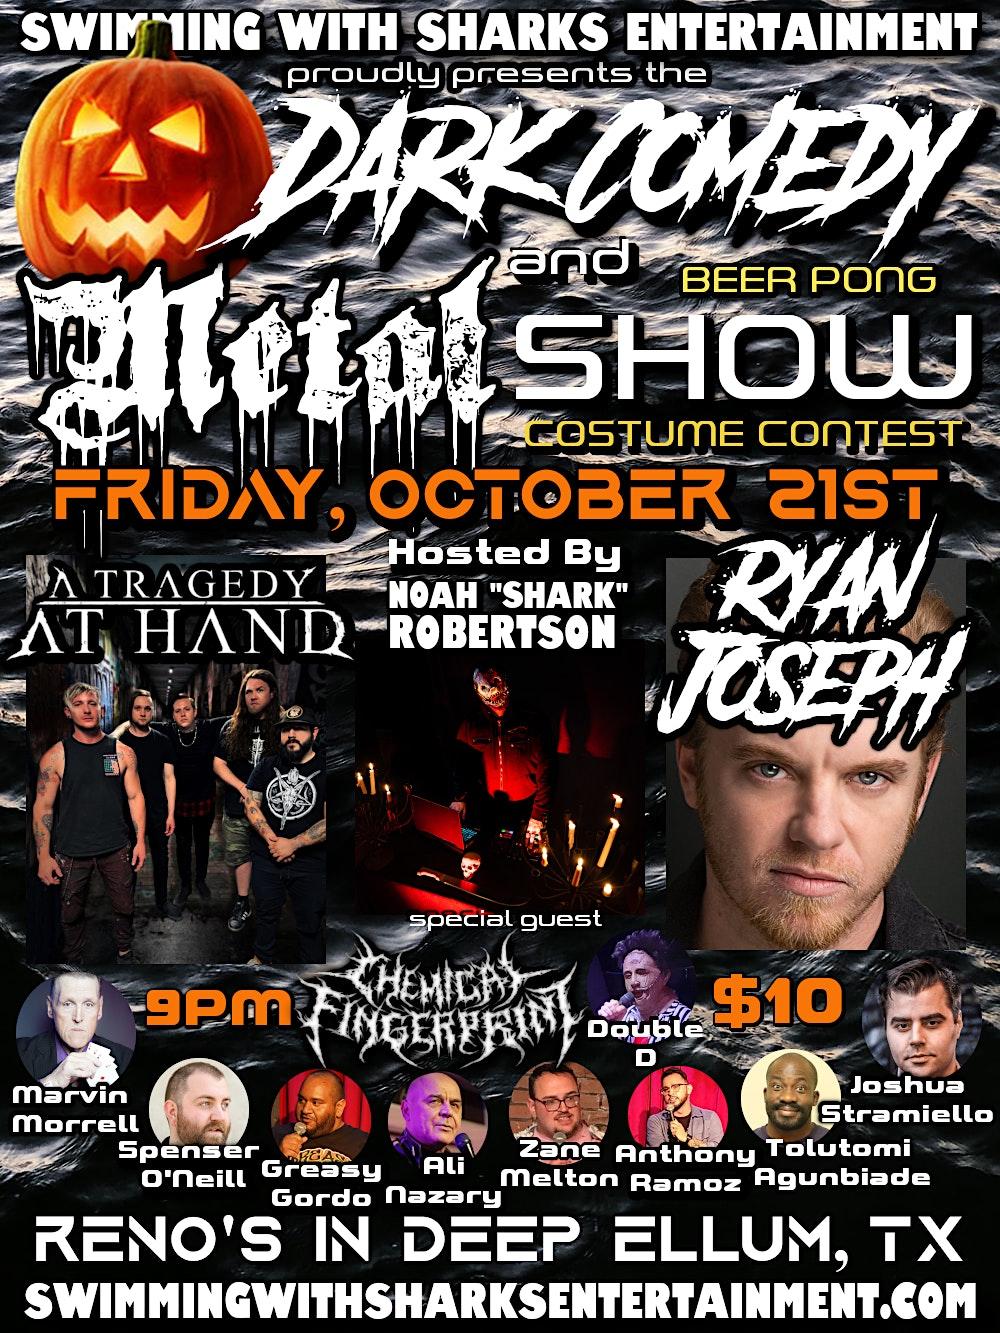 Dark Comedy and Heavy Metal Halloween Showcase
Fri Oct 21, 9:00 PM - Sat Oct 22, 1:00 AM
in 2 days